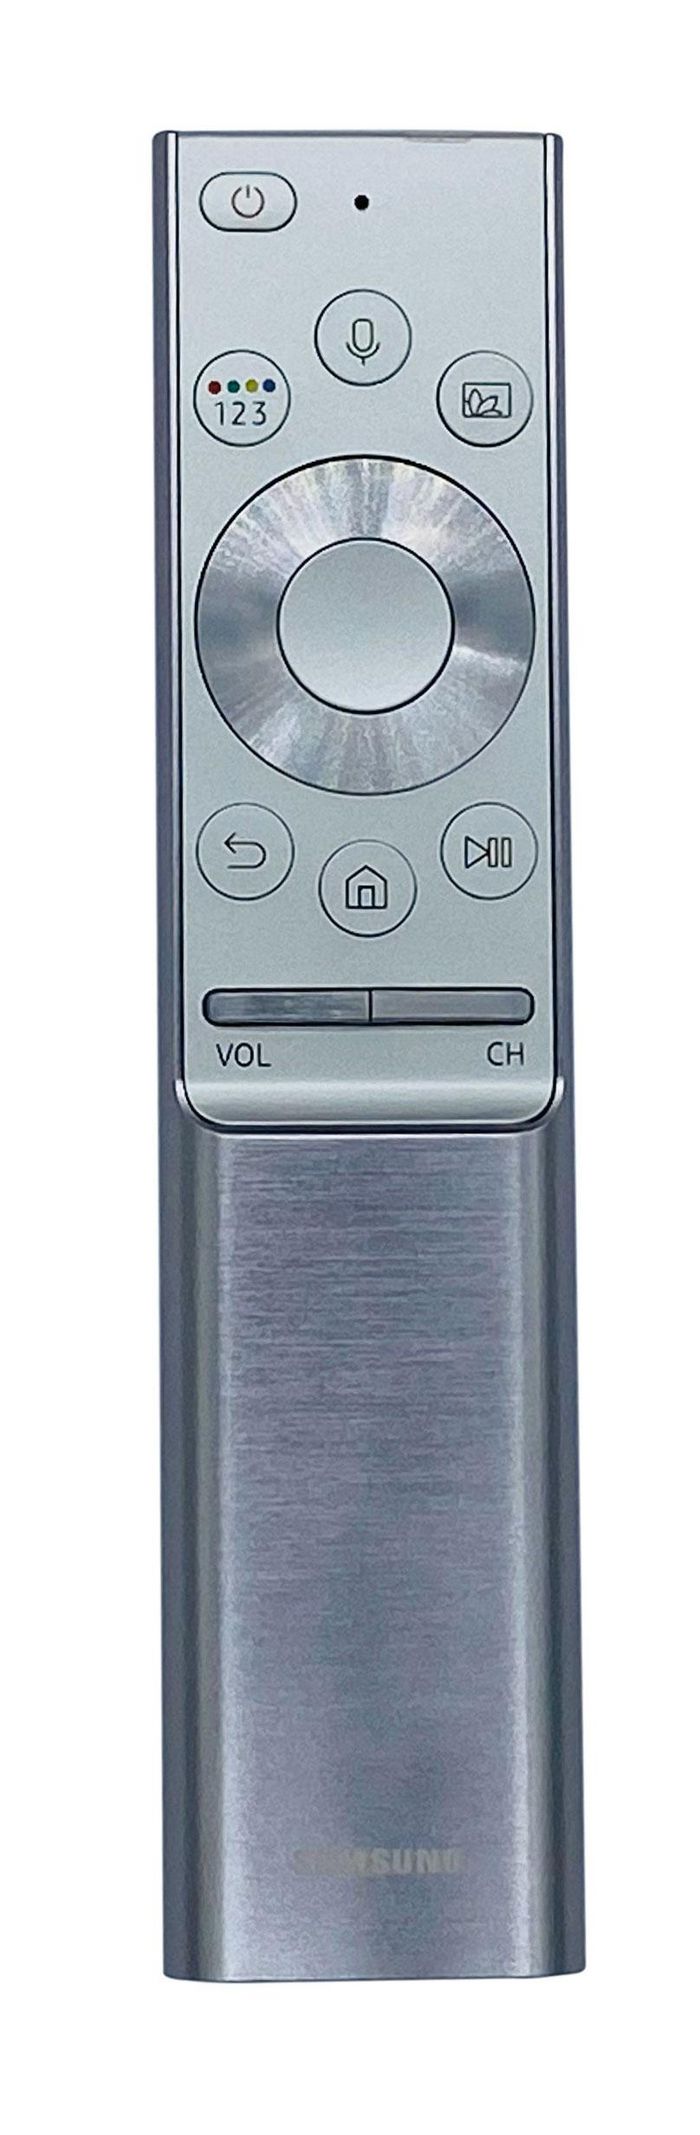 Samsung Smart Remote Control - W125507562